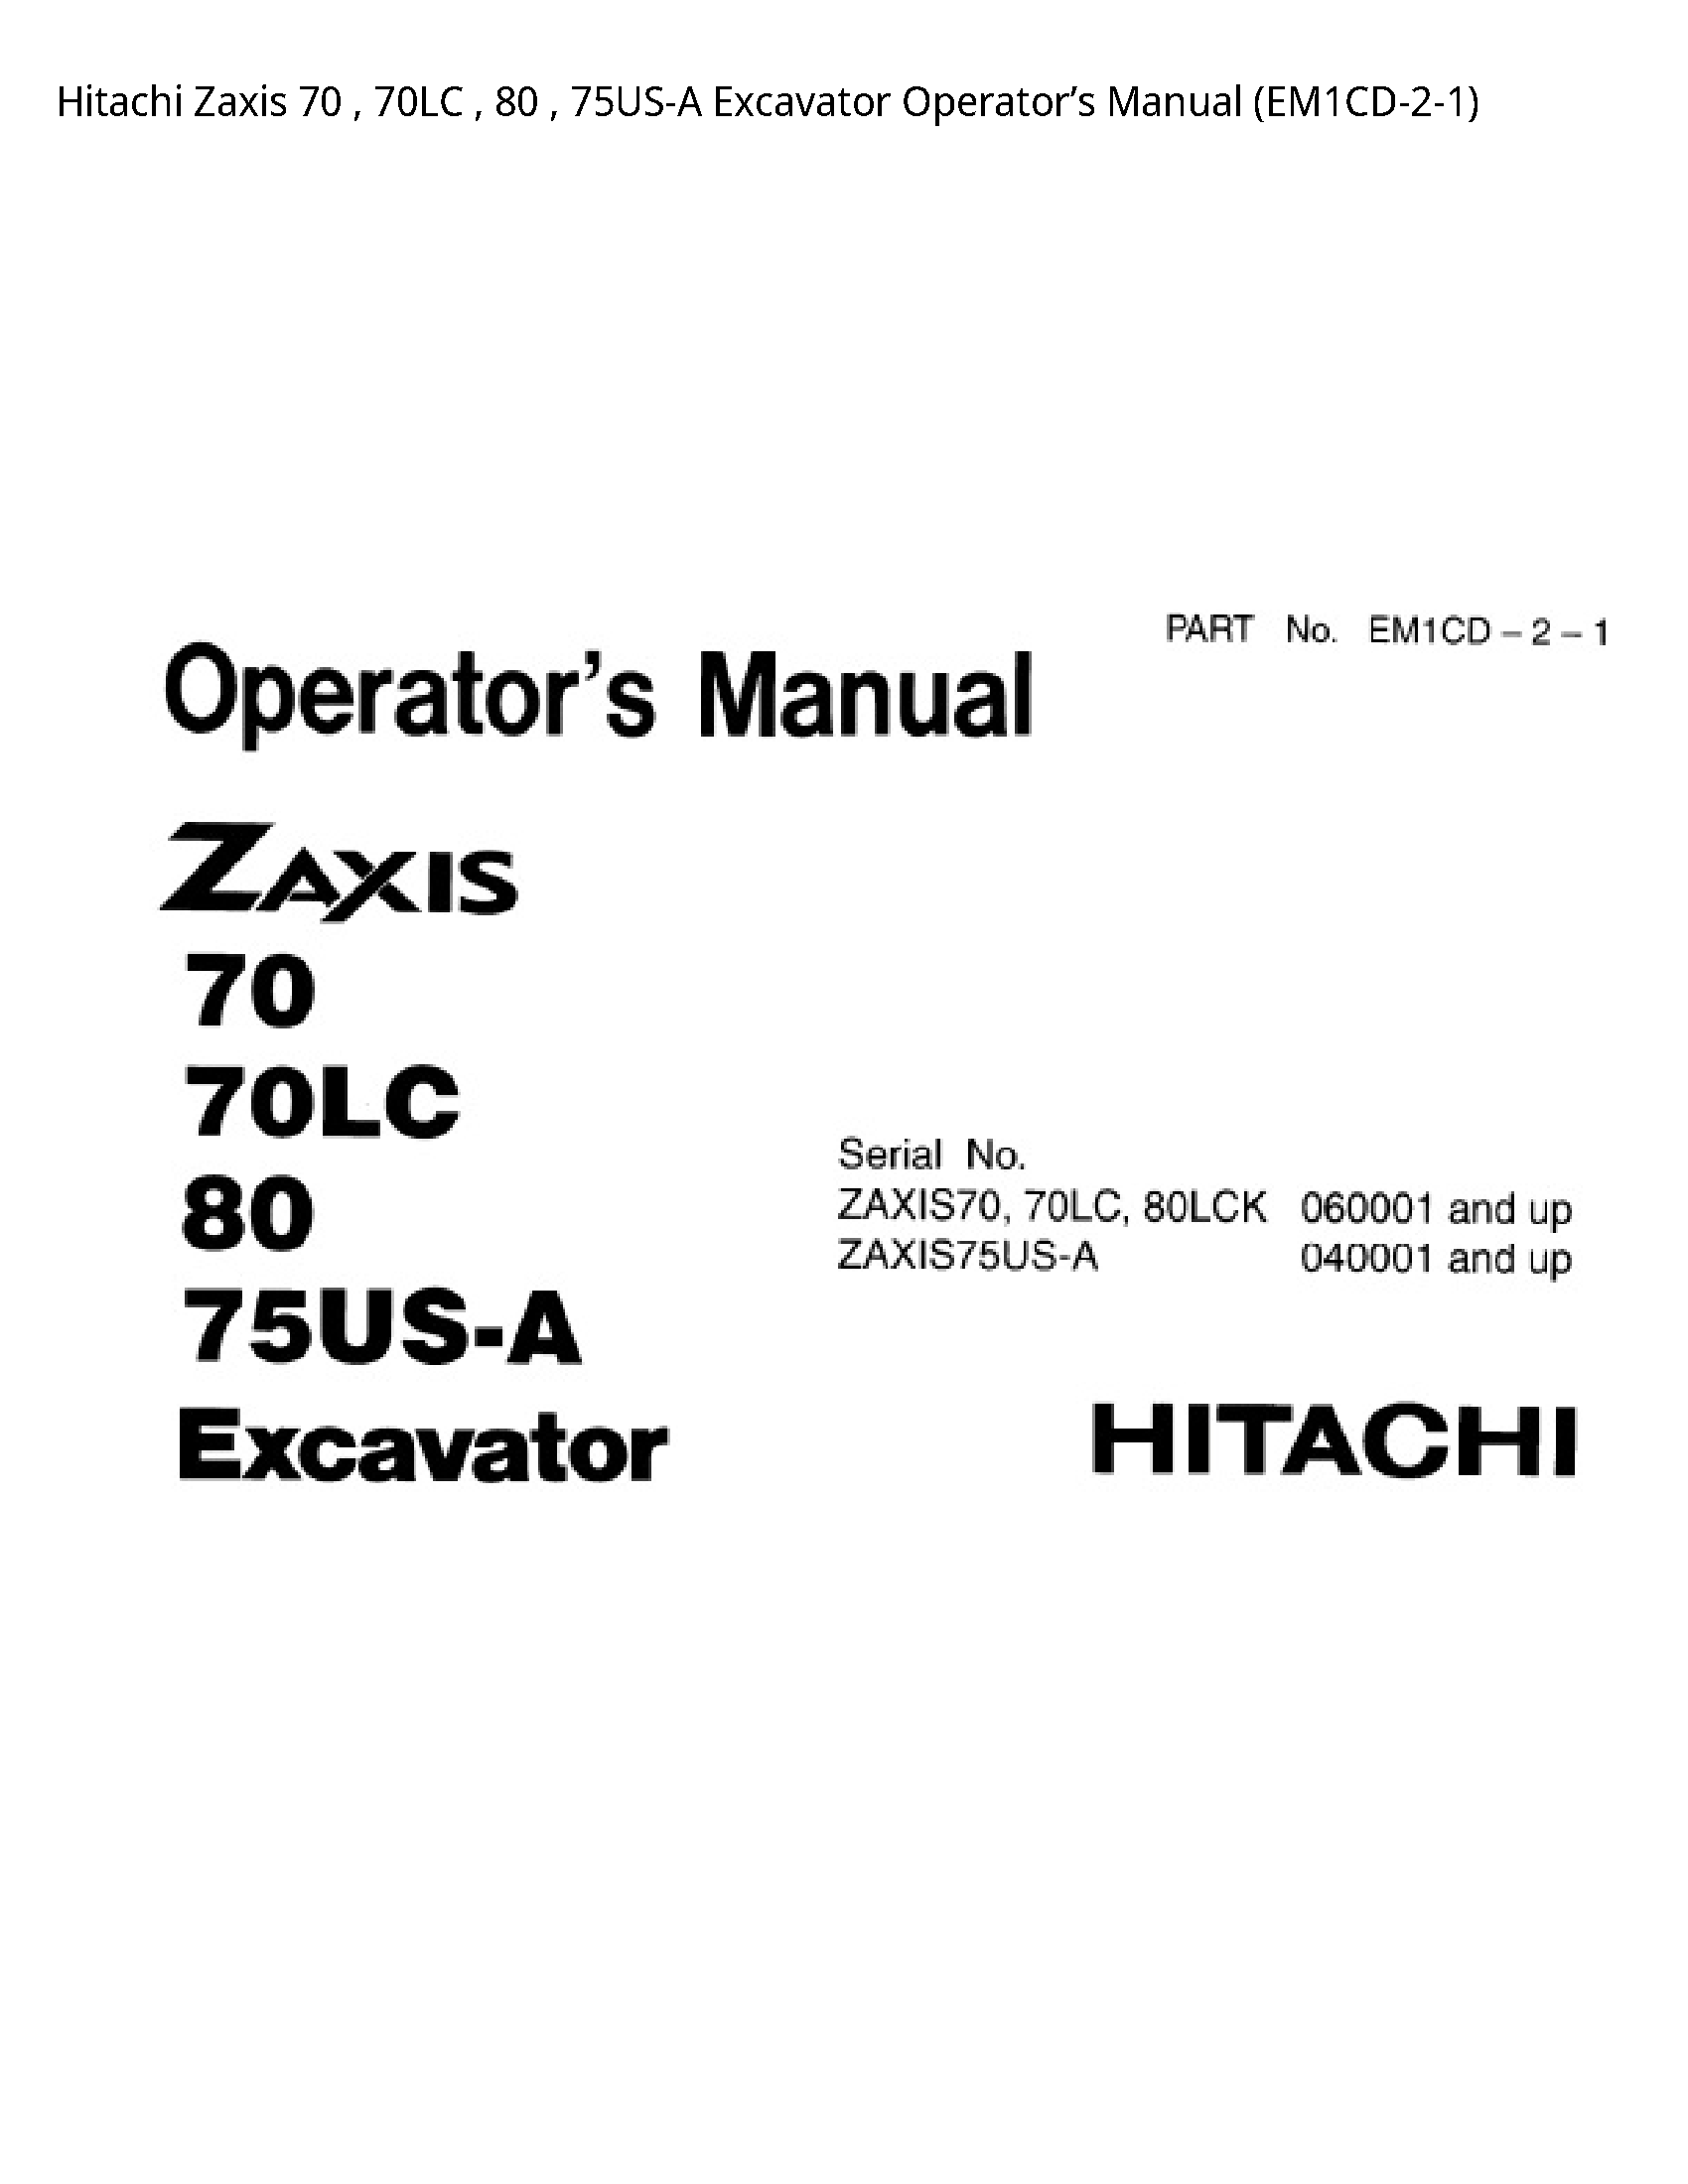 Hitachi 70 Zaxis Excavator Operator’s manual